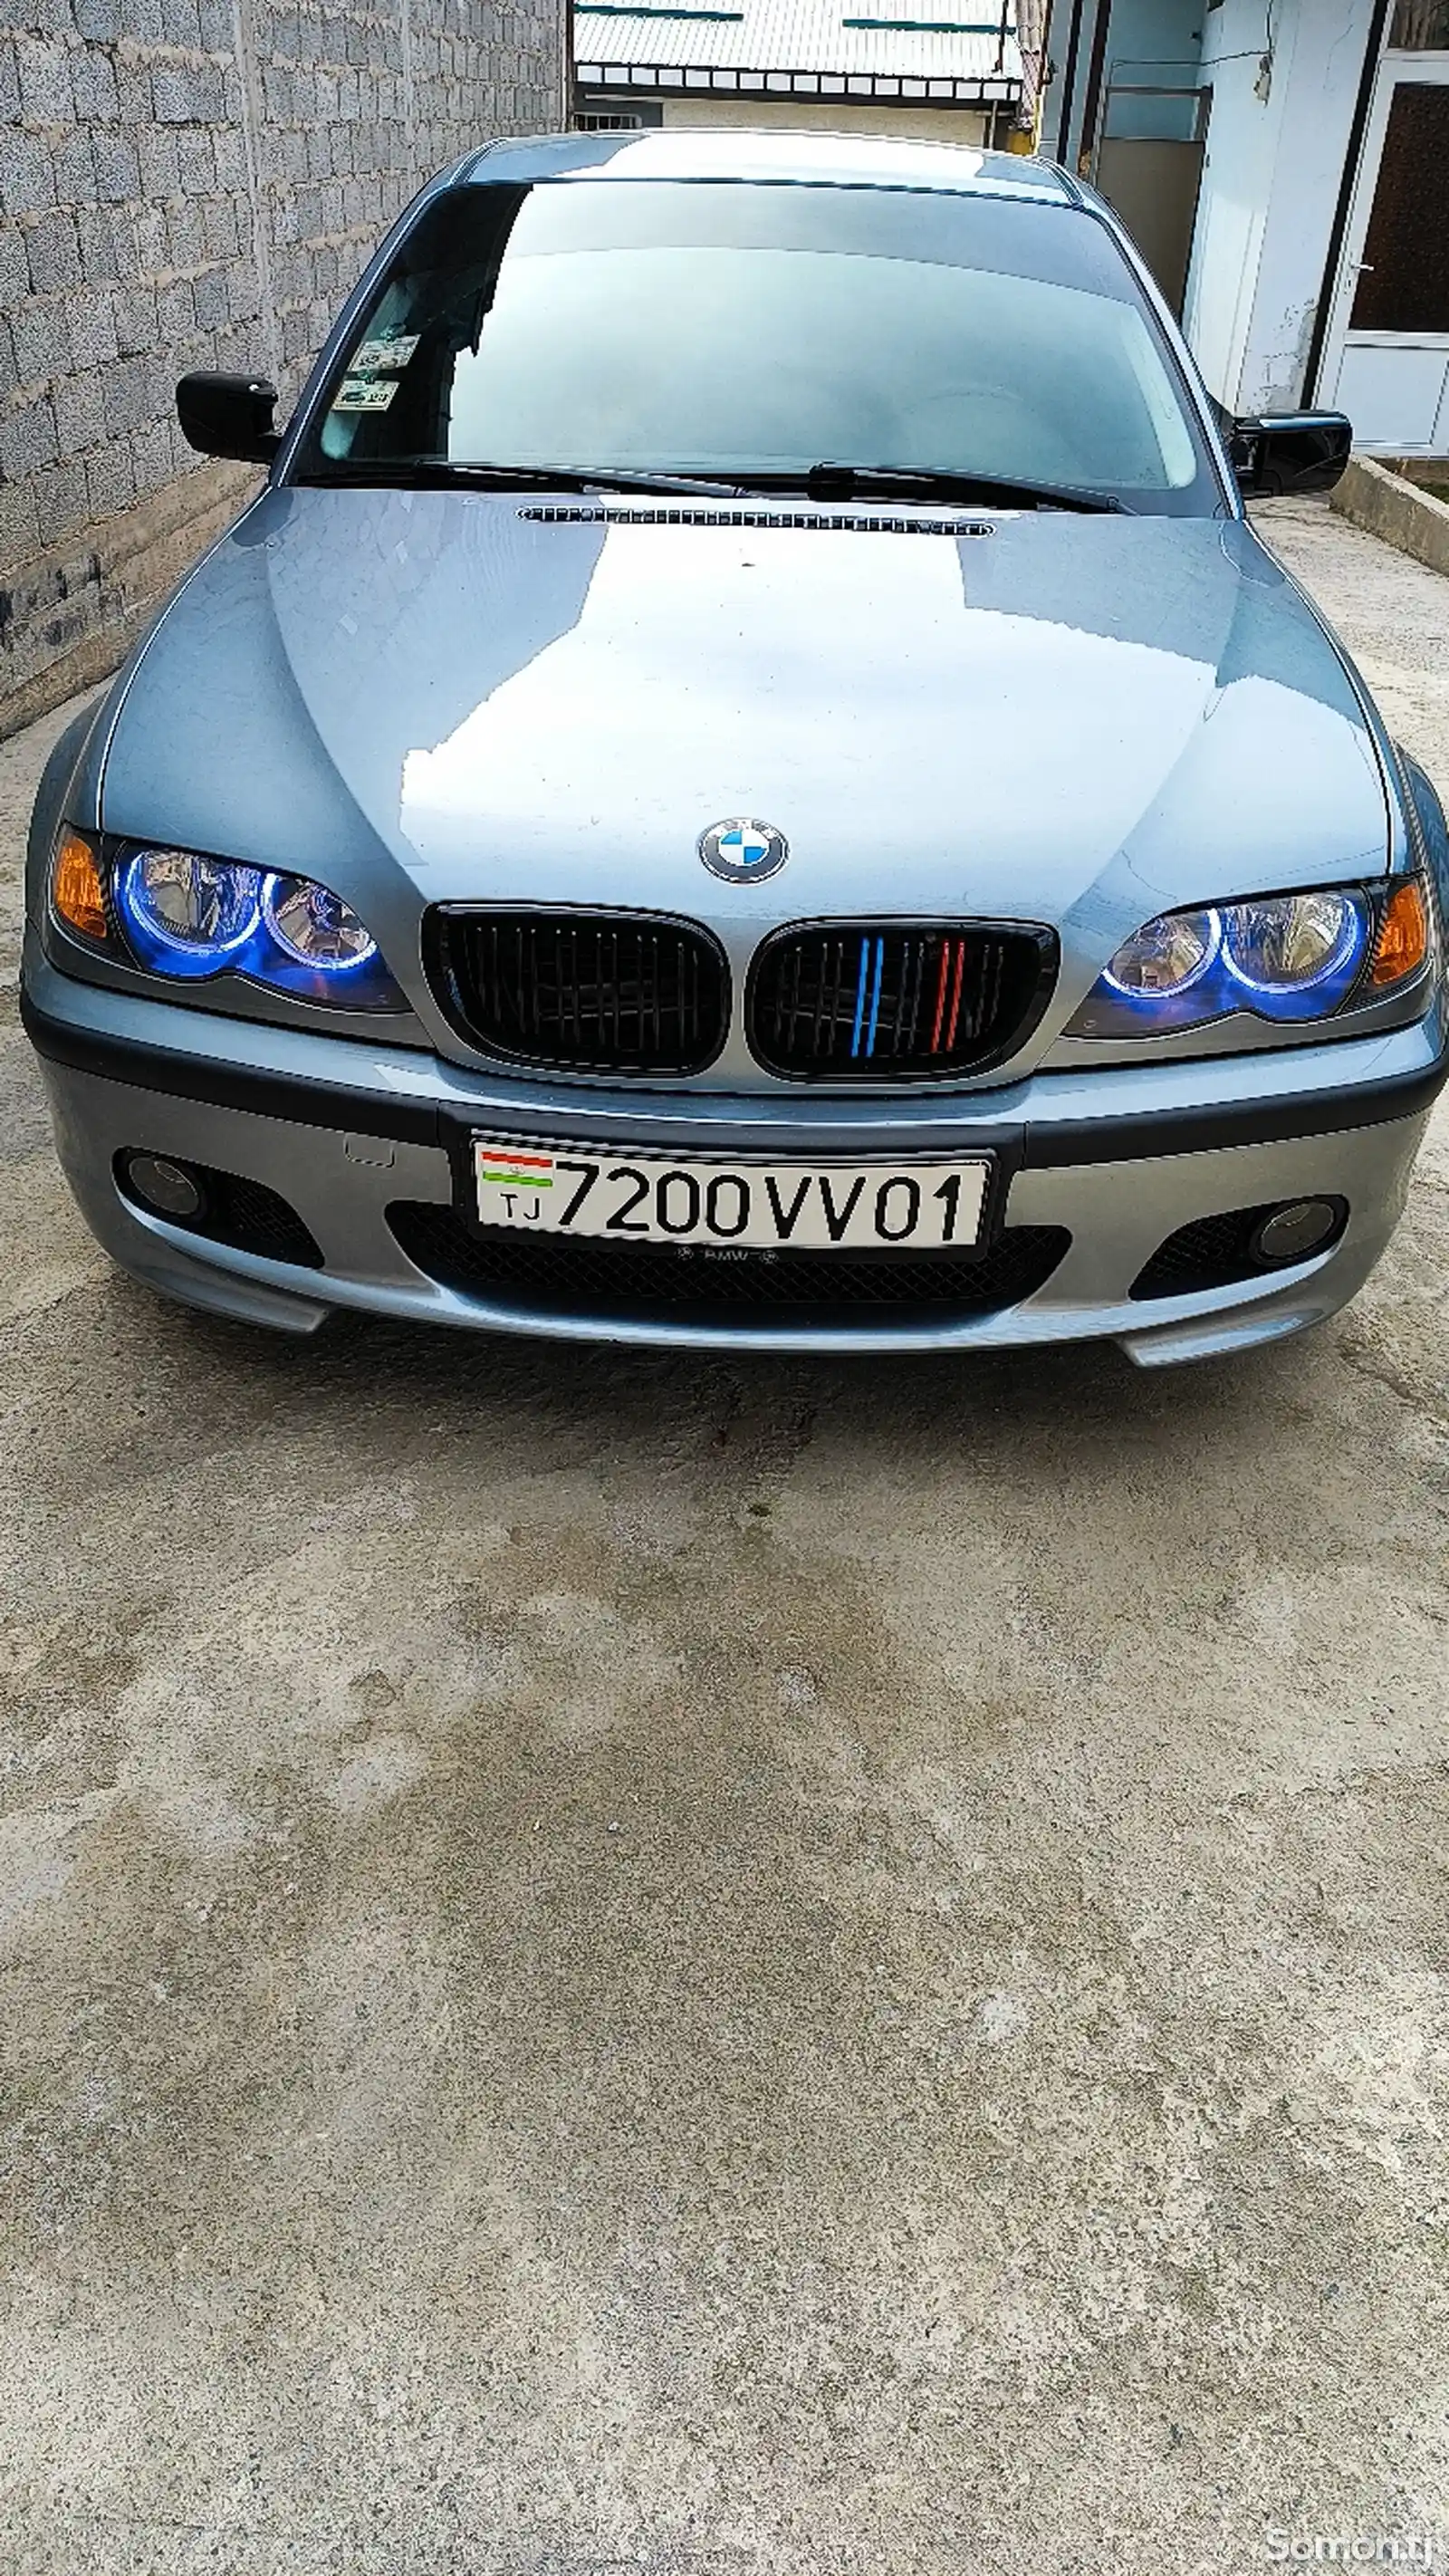 BMW 3 series, 2002-2